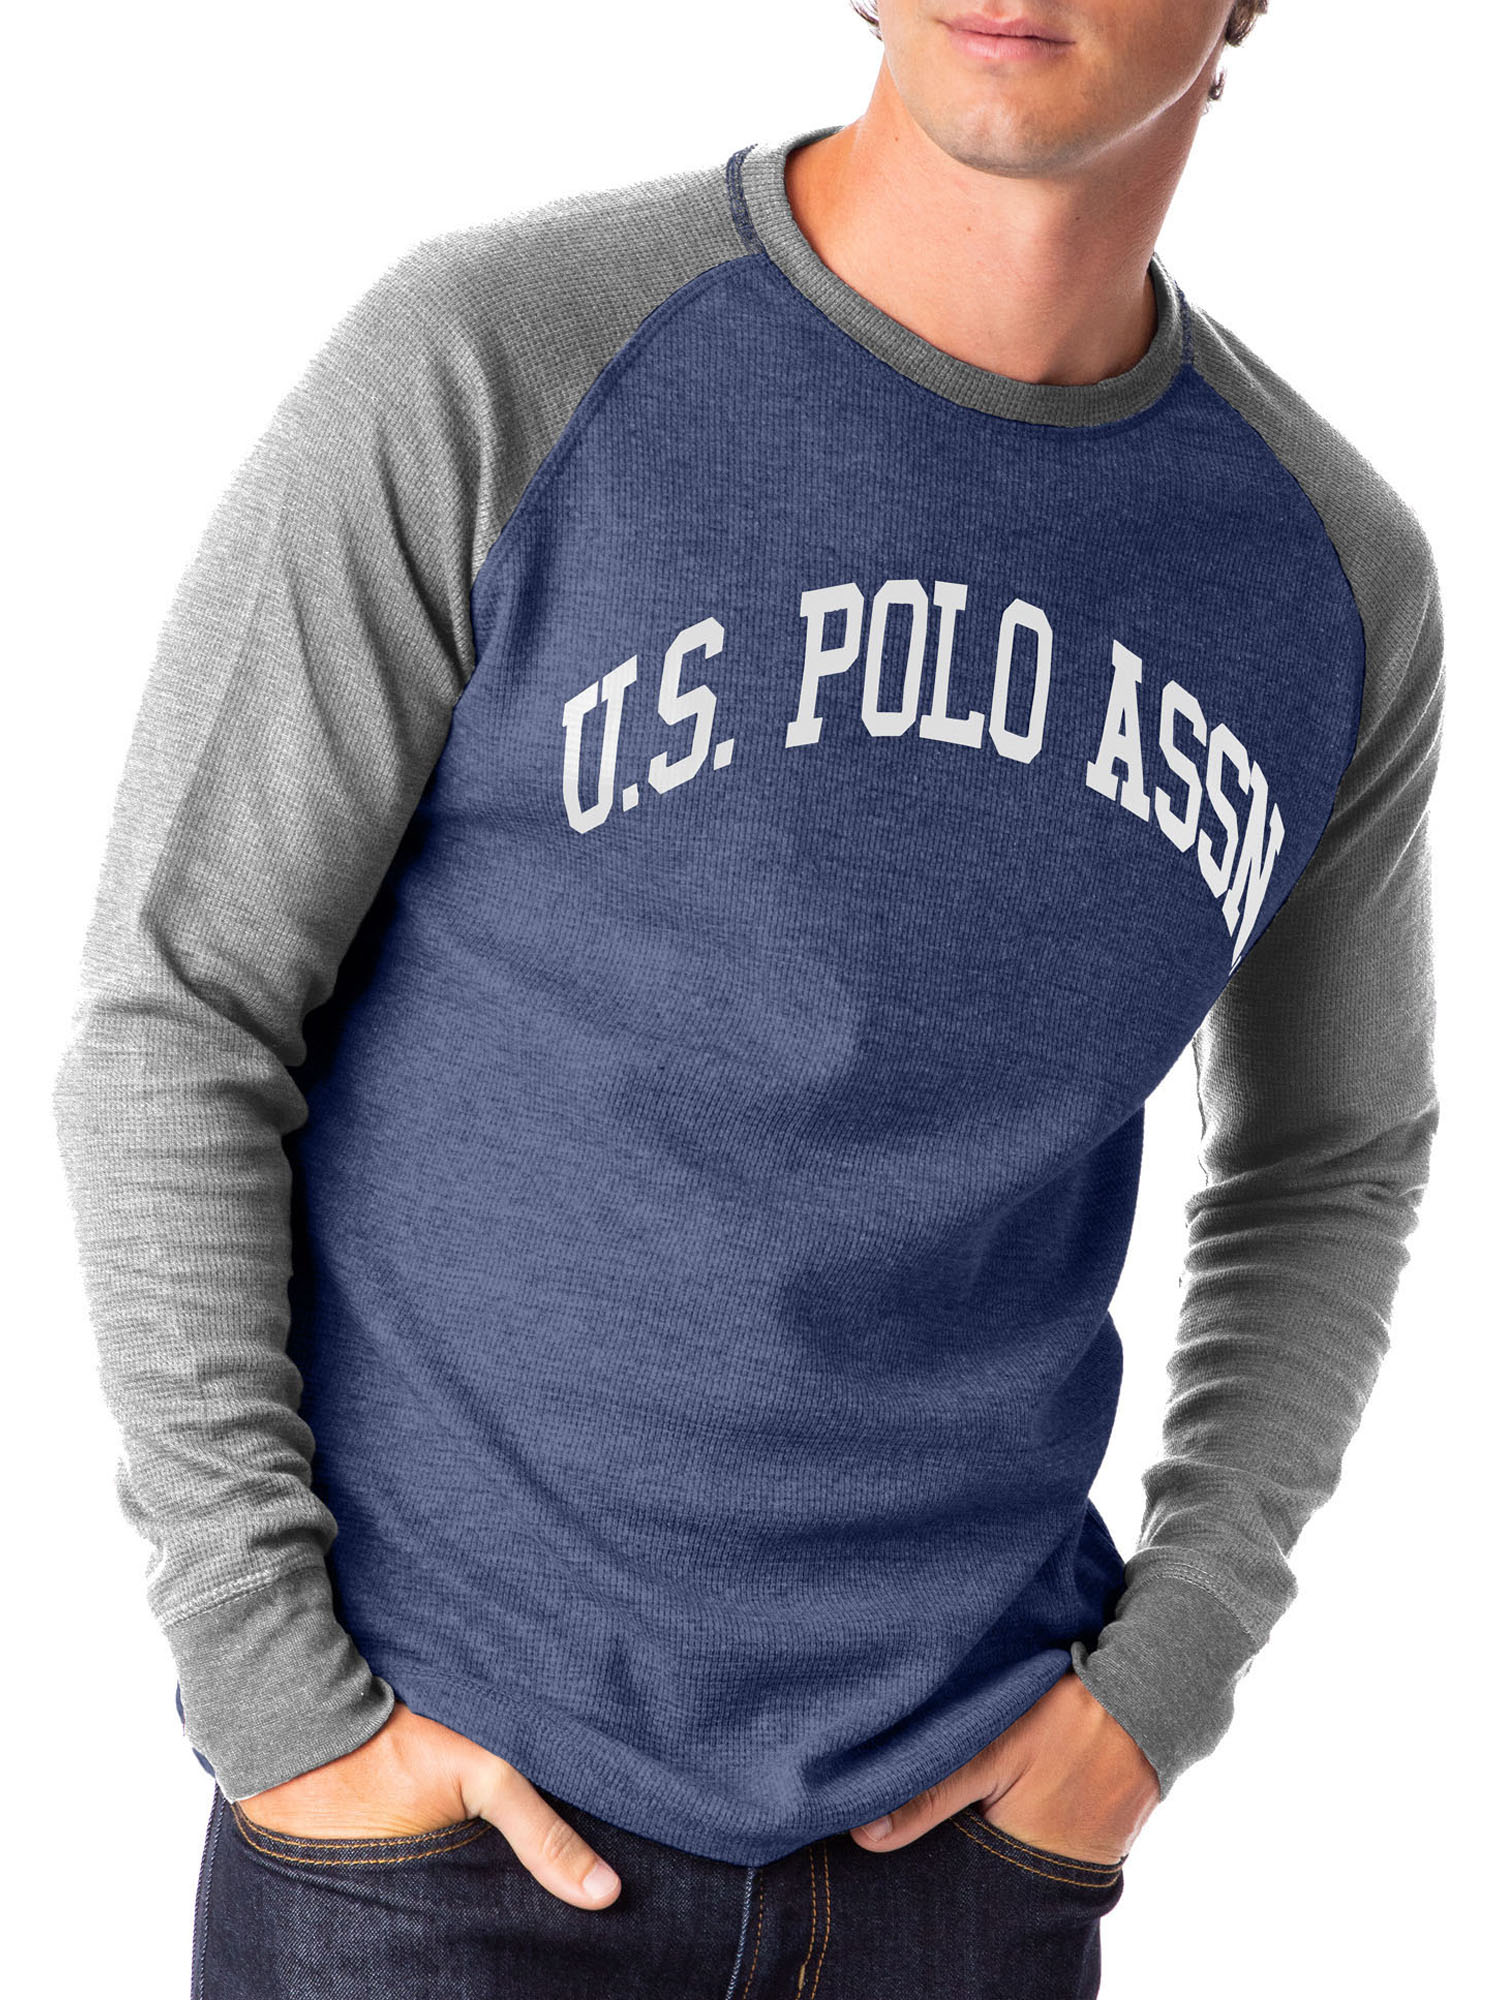 U.S. Polo Assn. Men's Raglan Sleeve Thermal Crew Tee - image 1 of 3